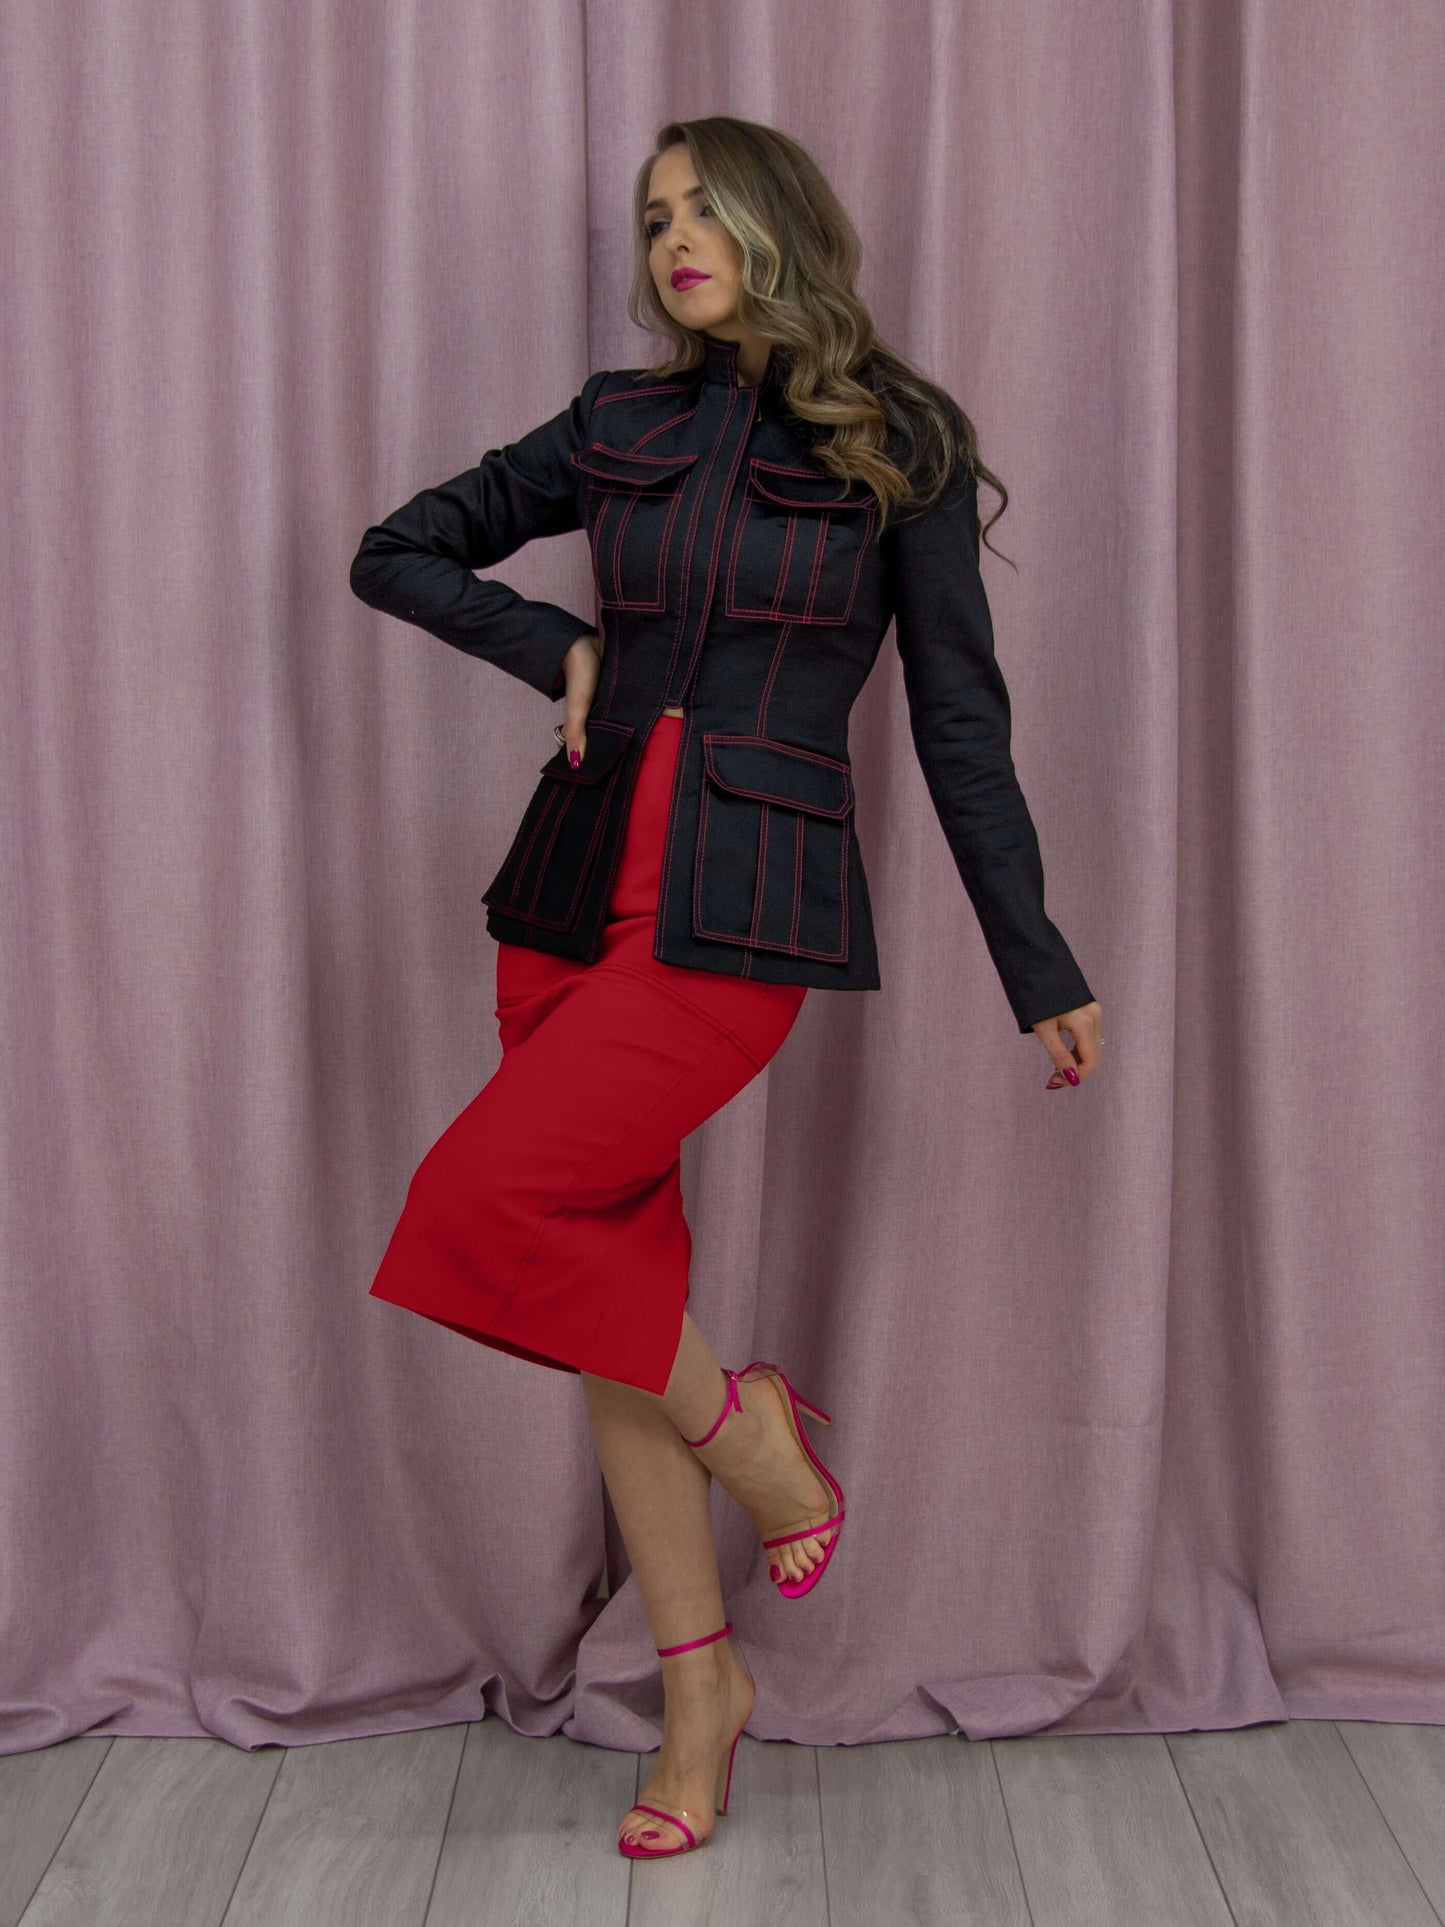 Details Matter Tailored Jacket - Black & Red by Tia Dorraine Women's Luxury Fashion Designer Clothing Brand